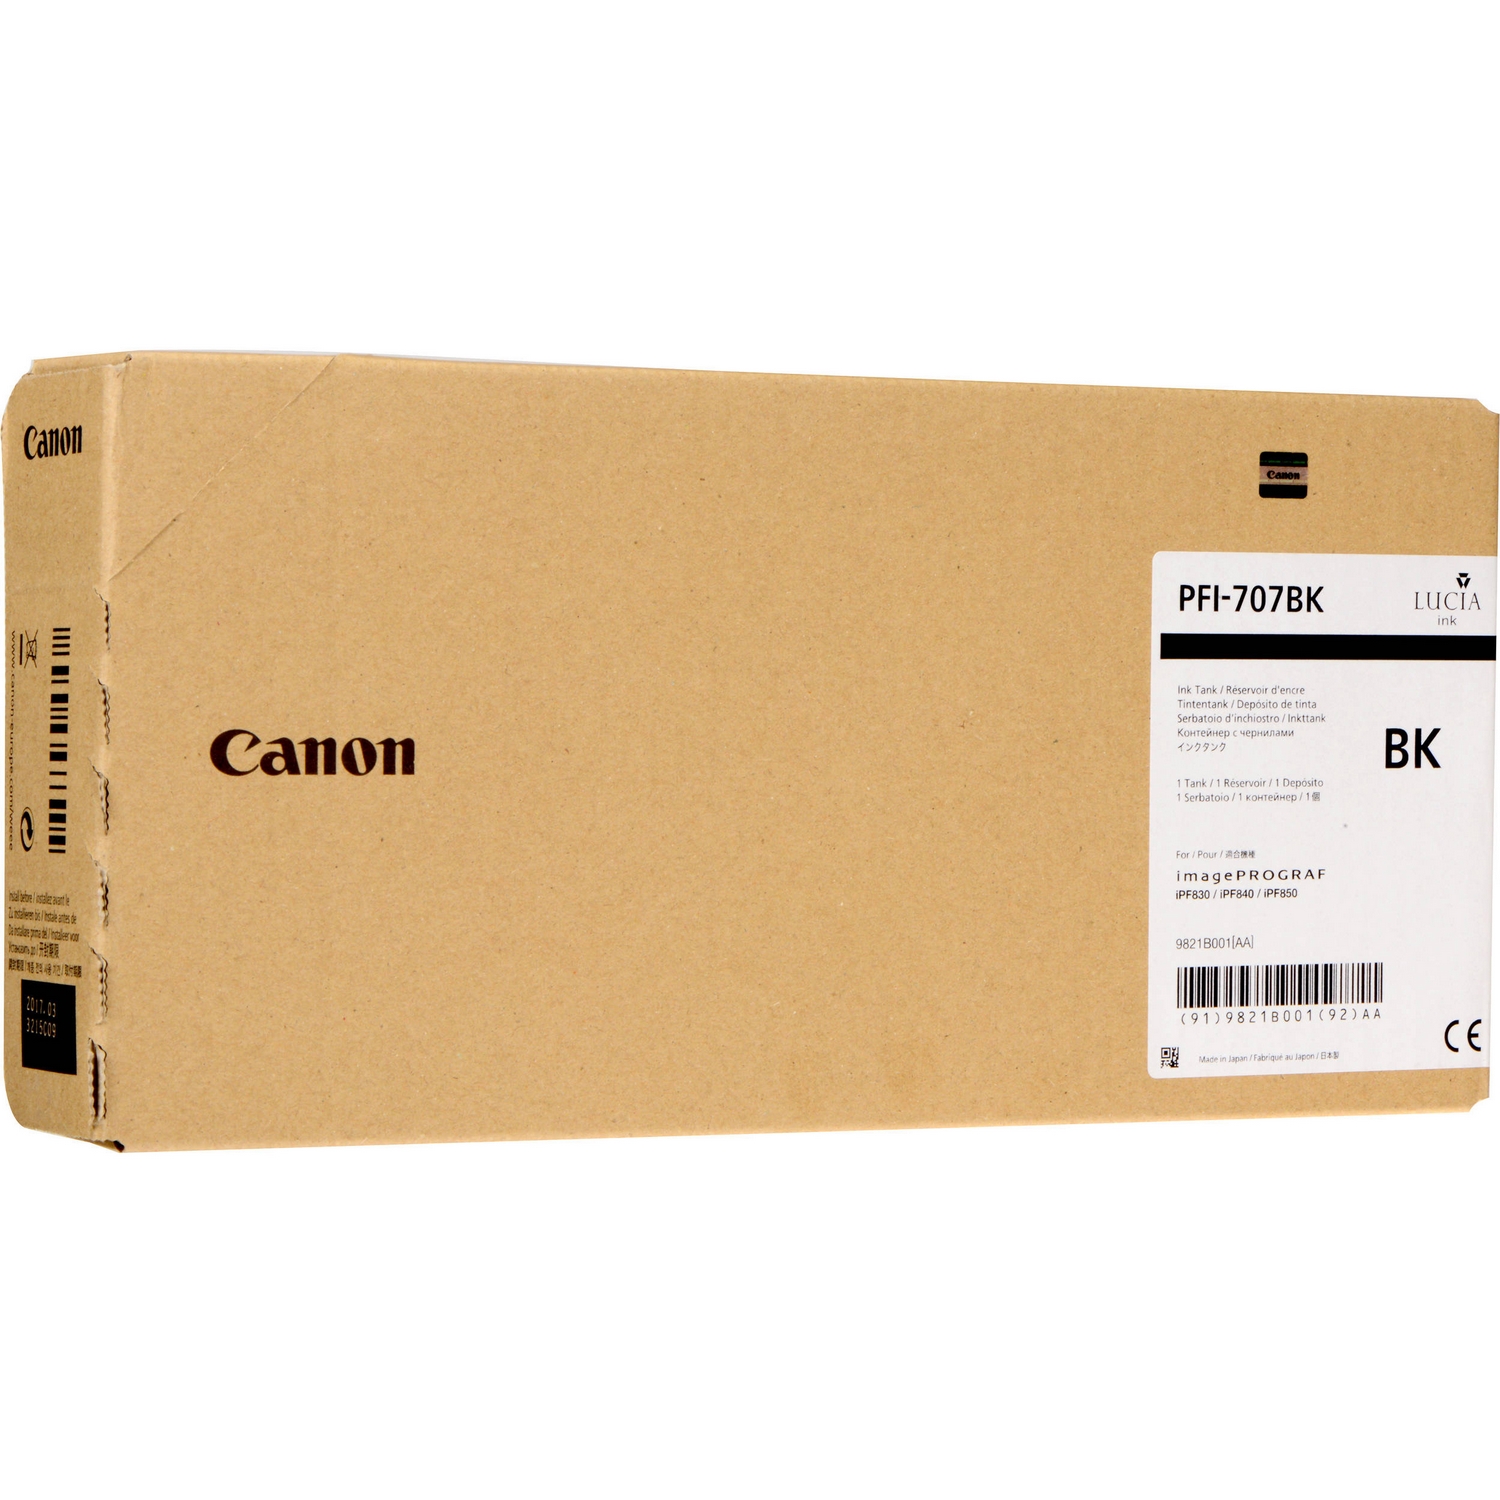 Original Canon PFI-707BK Black High Capacity Ink Cartridge (9821B001AA)